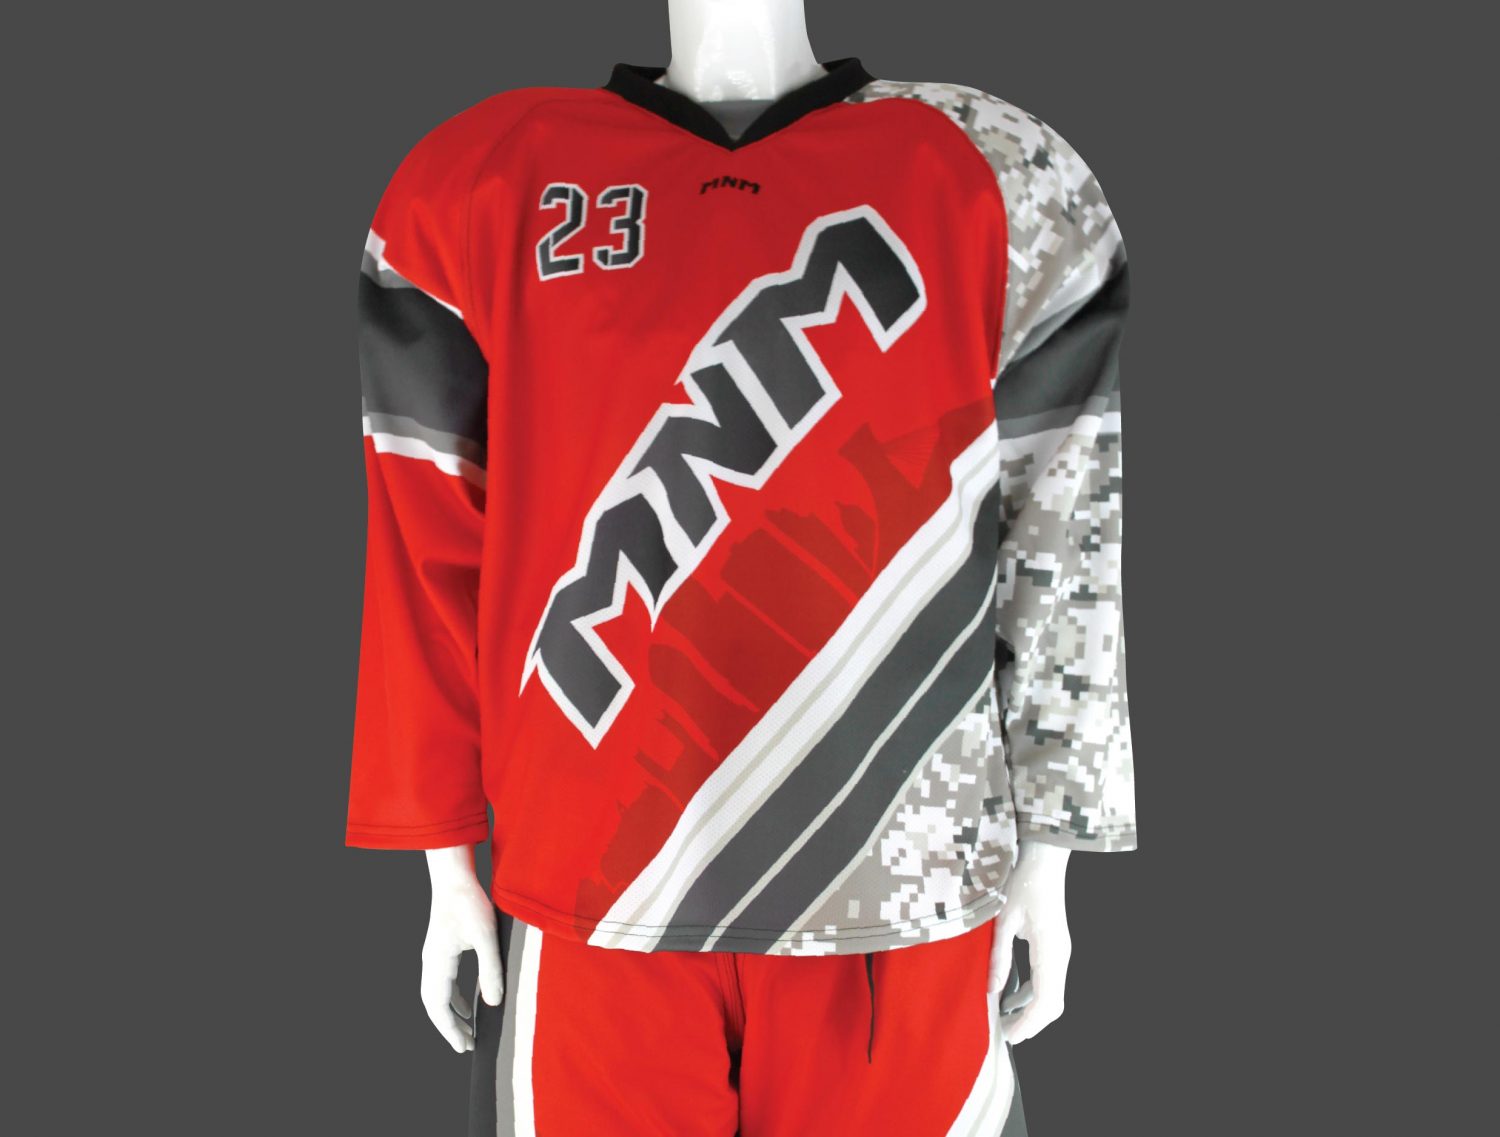 Goalie jersey - MNM Sports